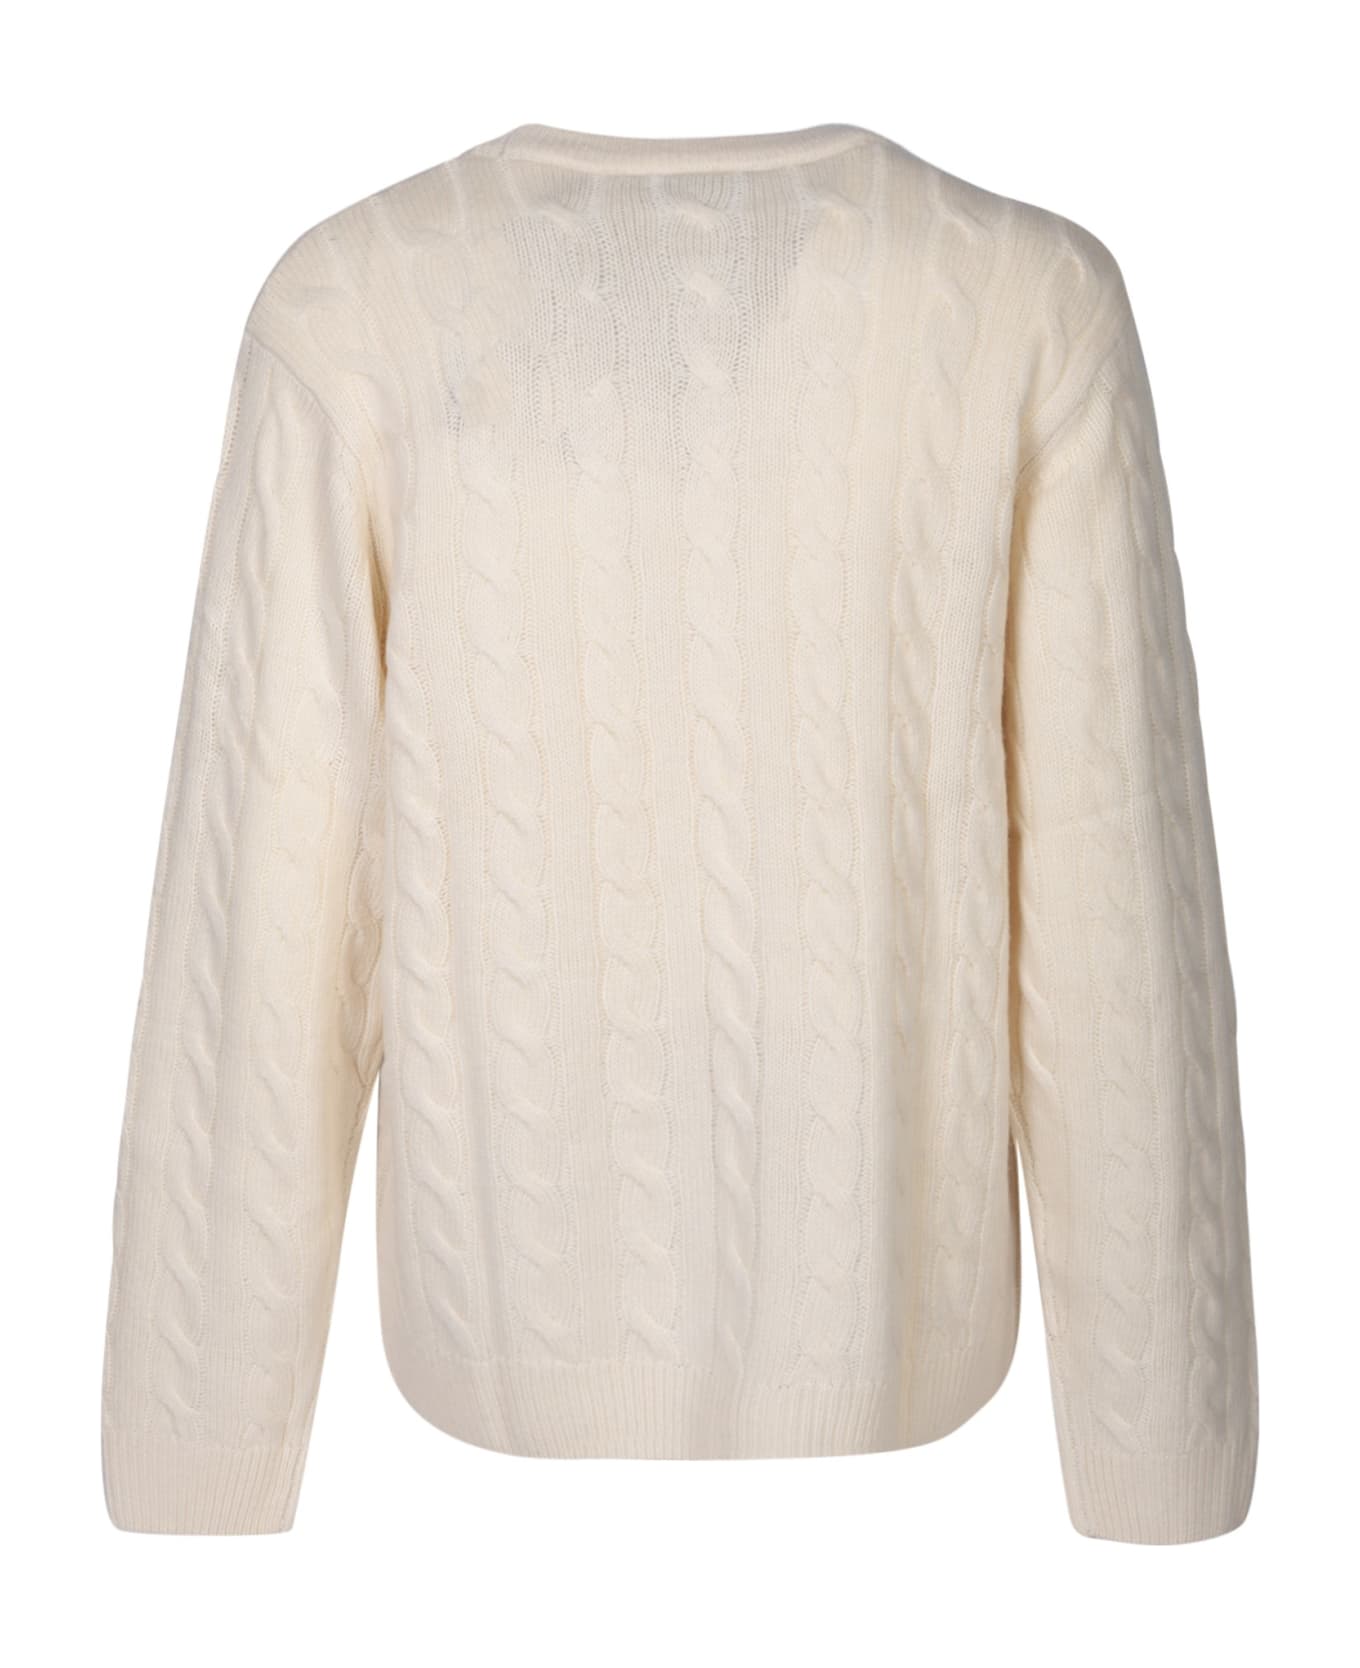 Carhartt Cambell Cream Sweater - Beige